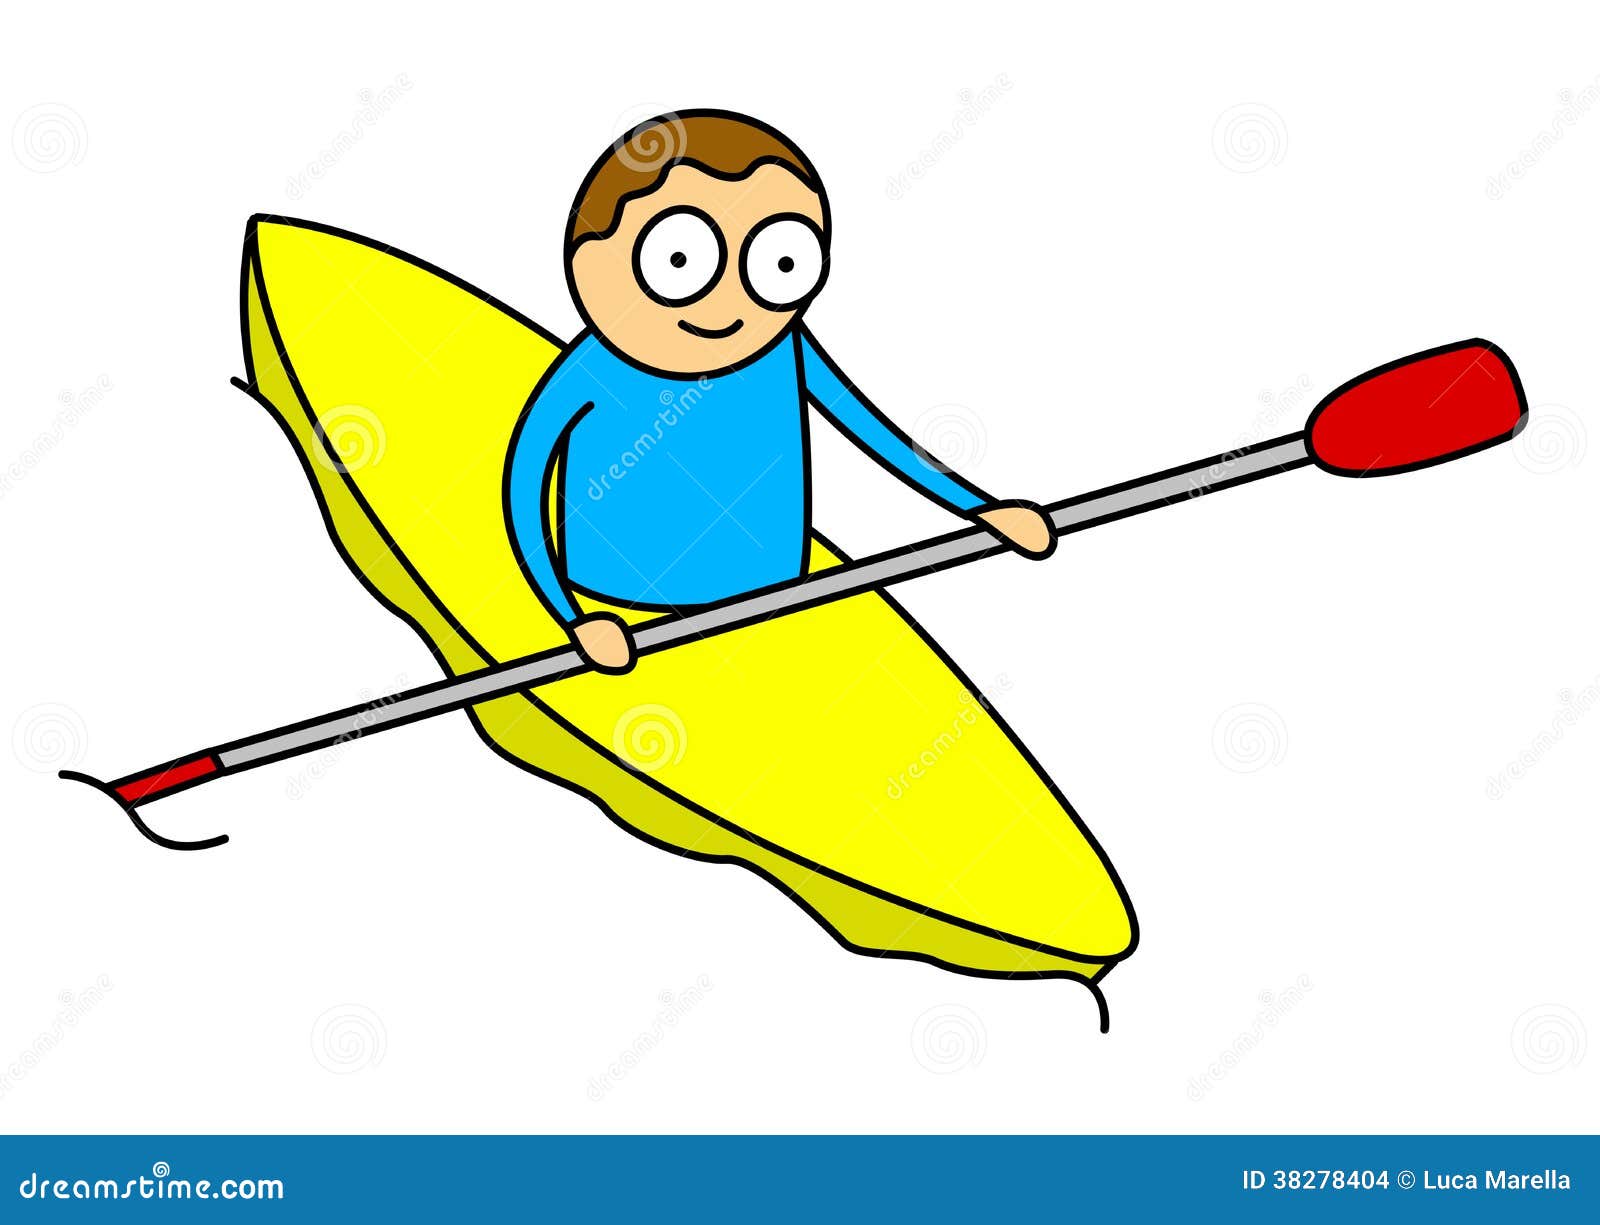 animated kayak clipart - photo #26